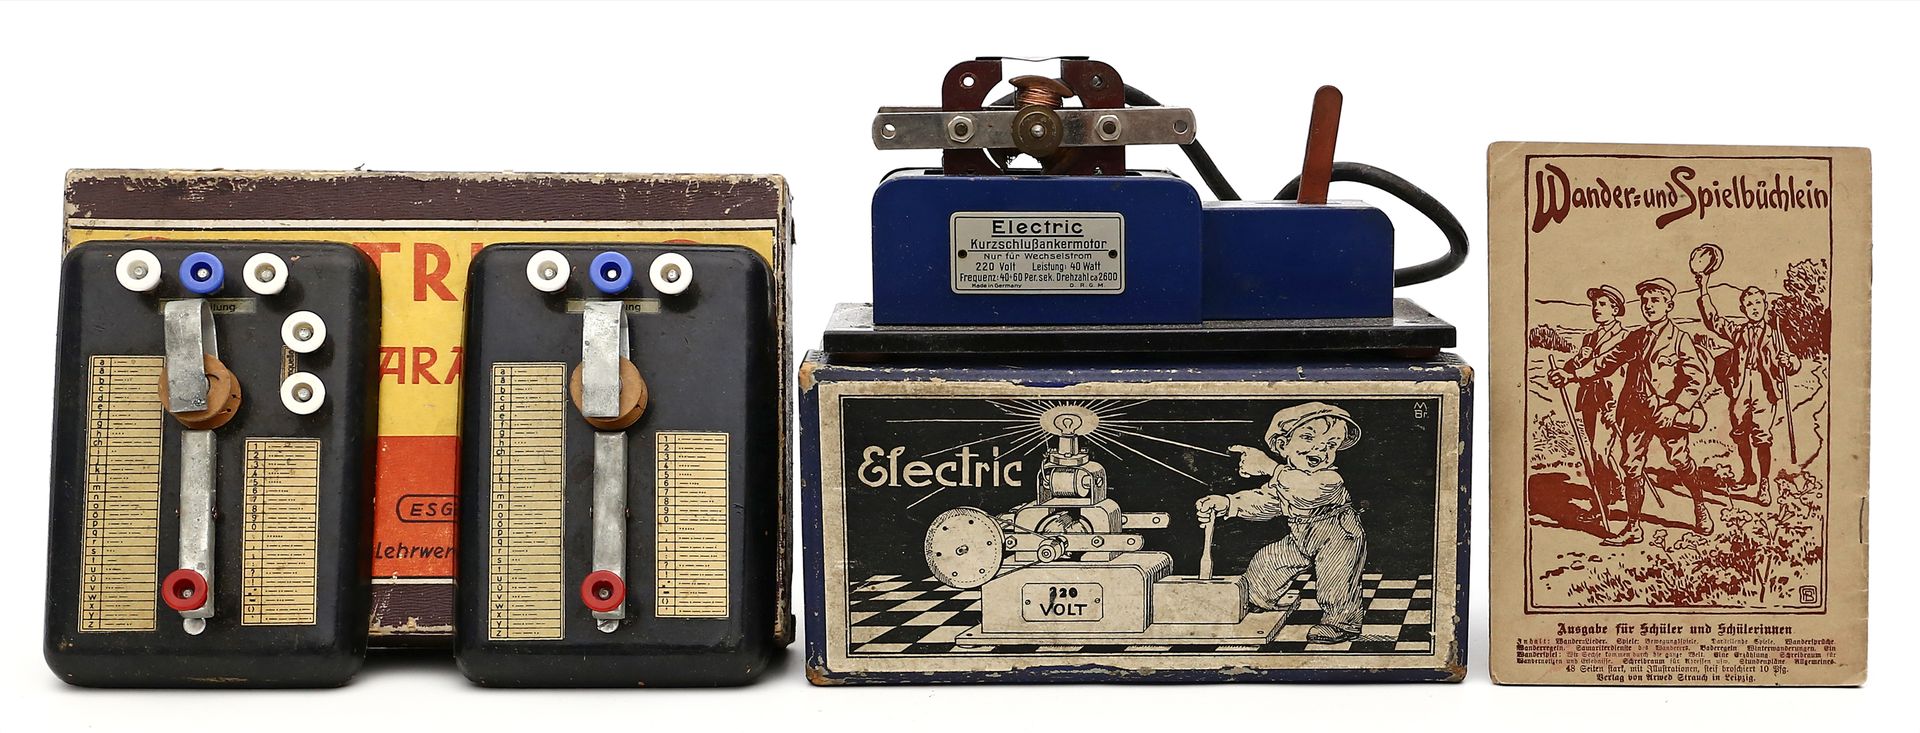 Elektromotor und Electric-Morseapparat,